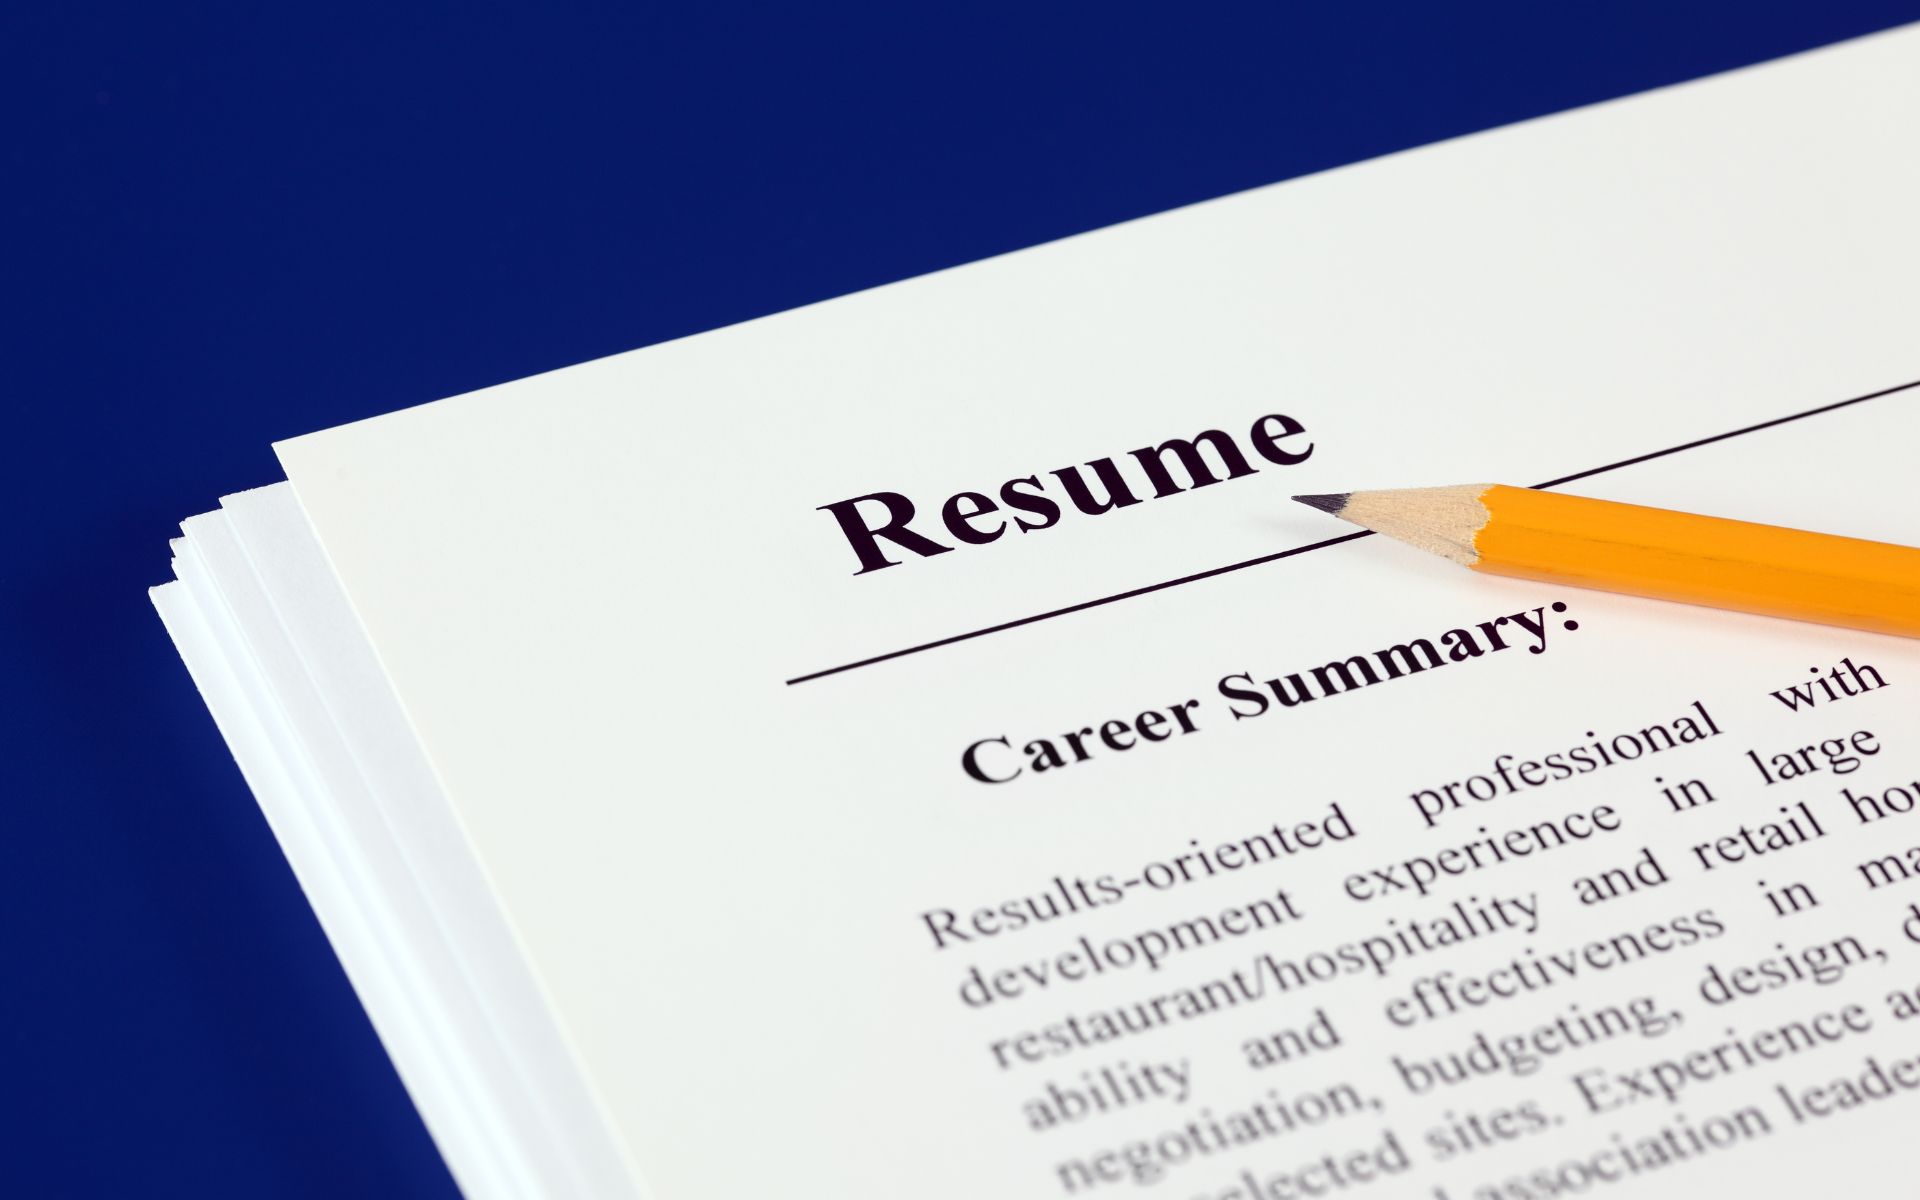 Improve Your Resume